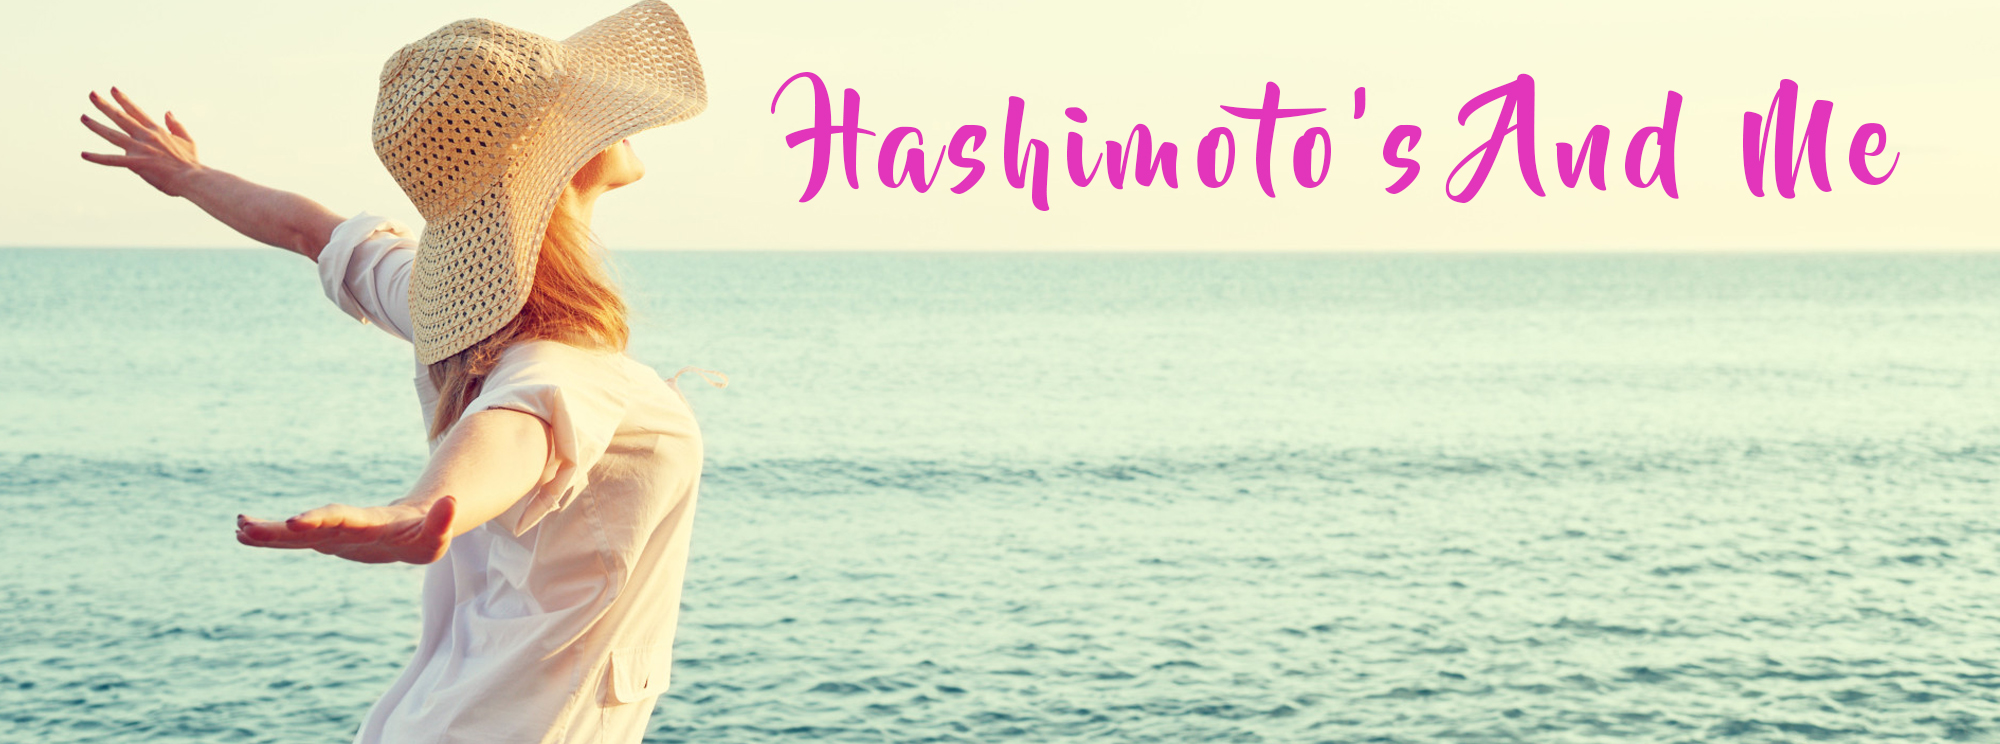 Hashimoto's